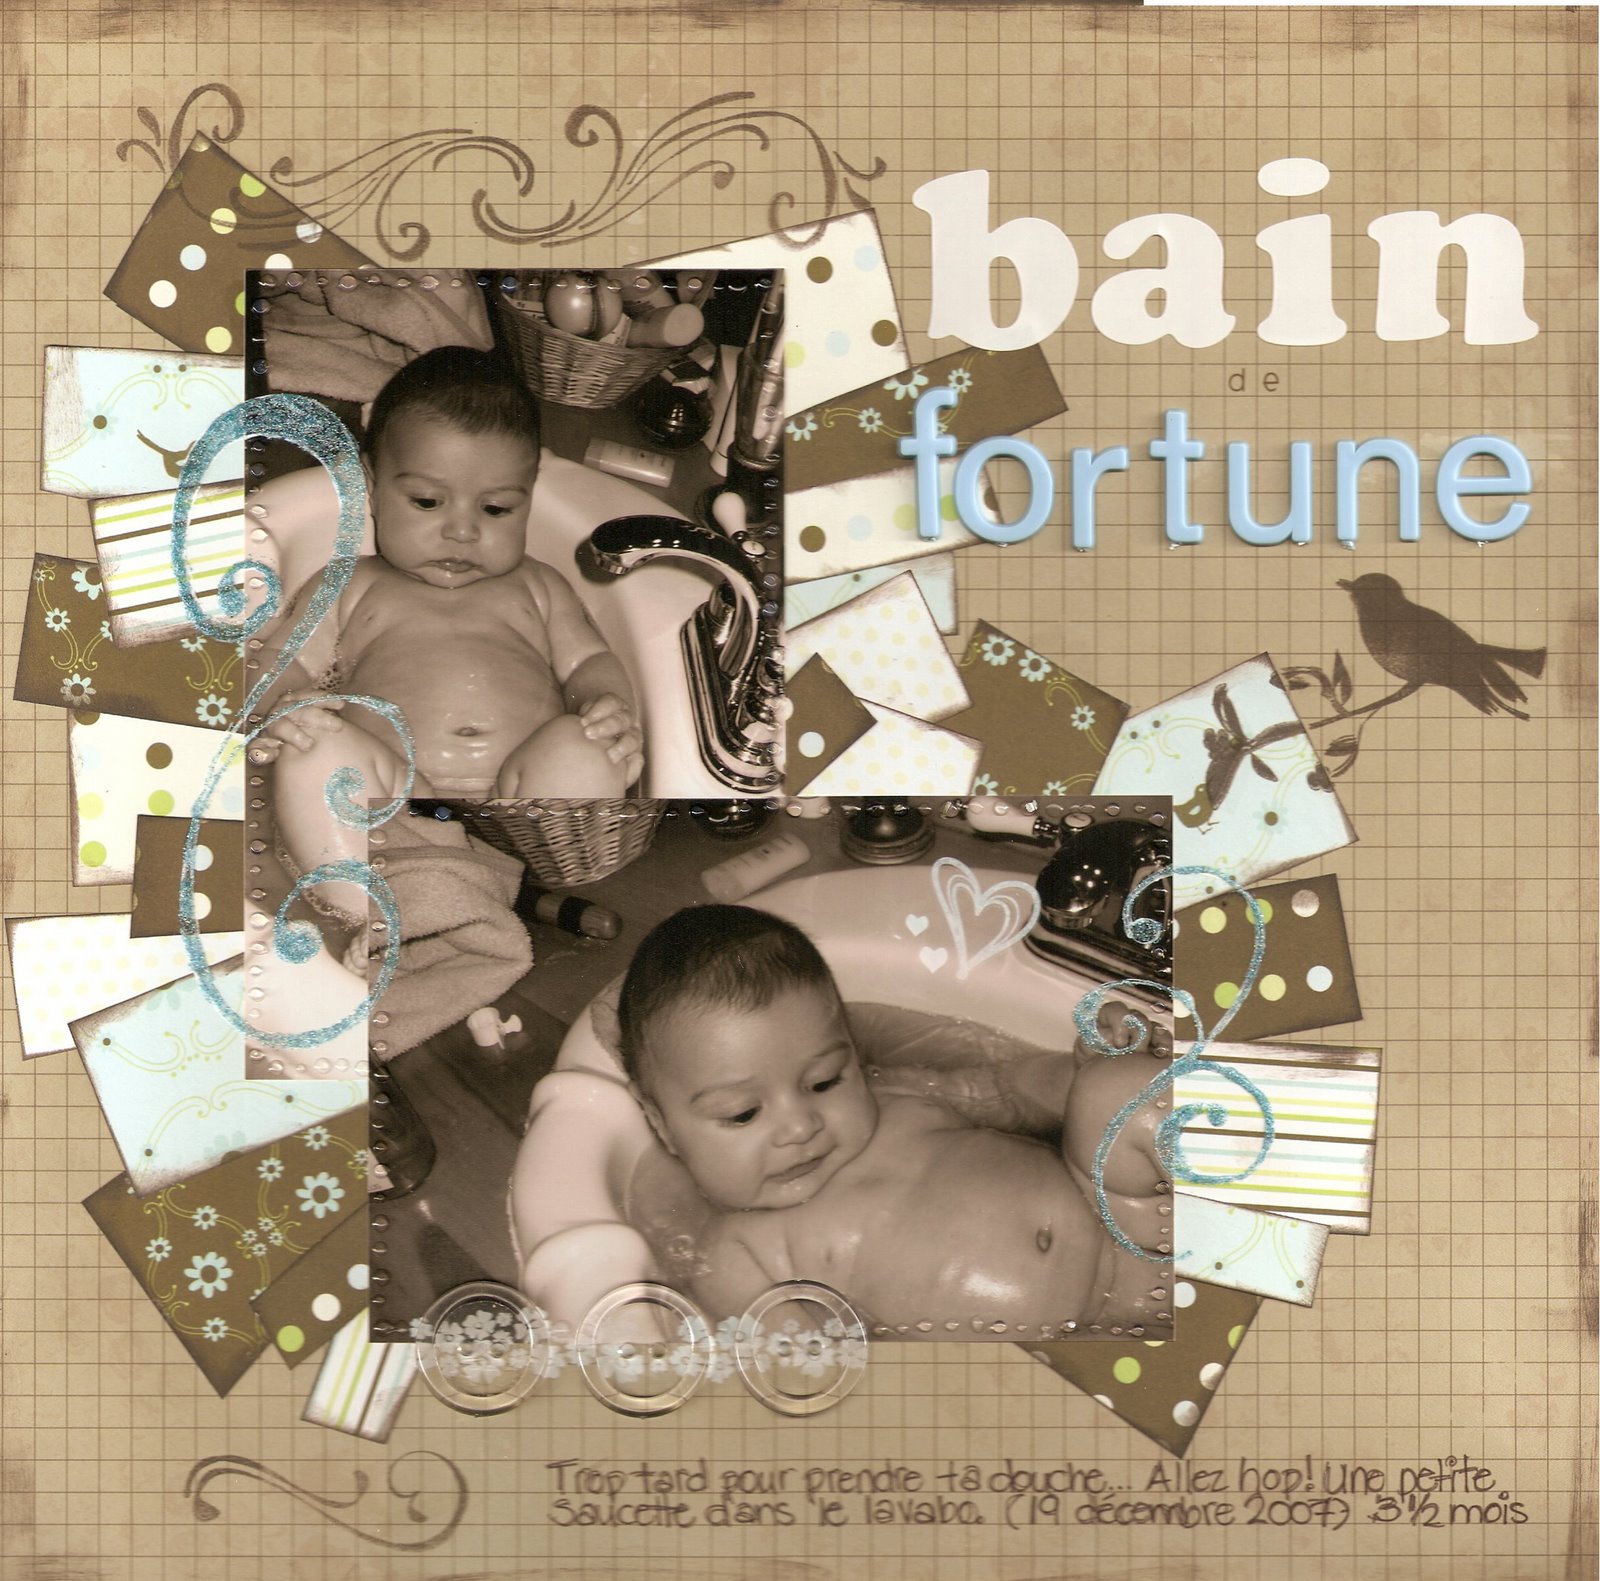 [2008-07-22+bain+de+fortune.jpg]